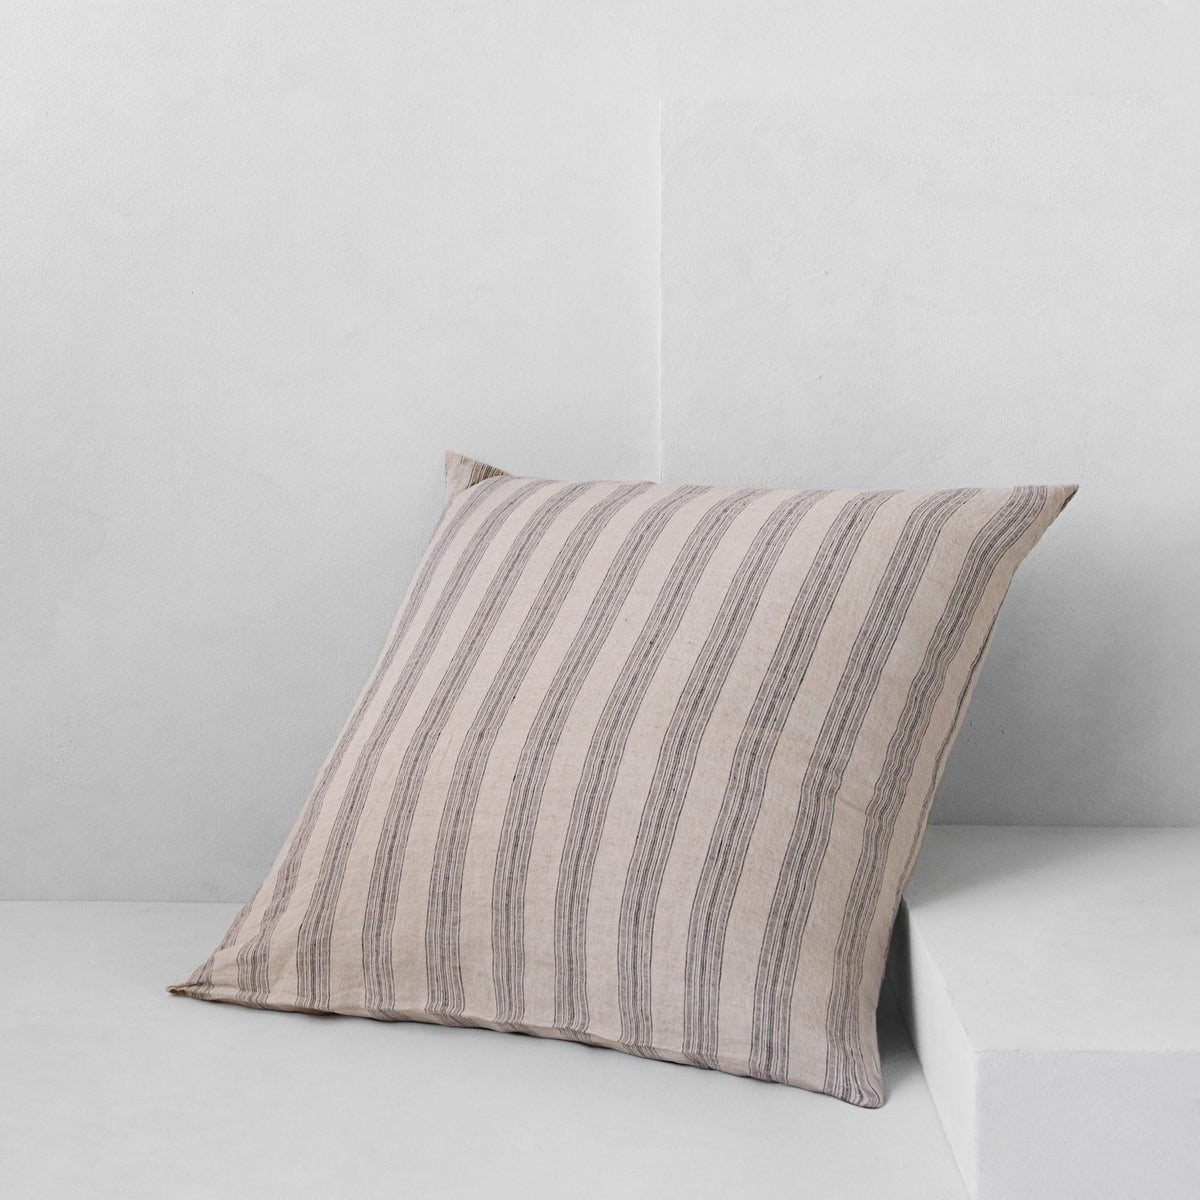 Basix Stripe European Linen Pillowcase - Nox/Sable